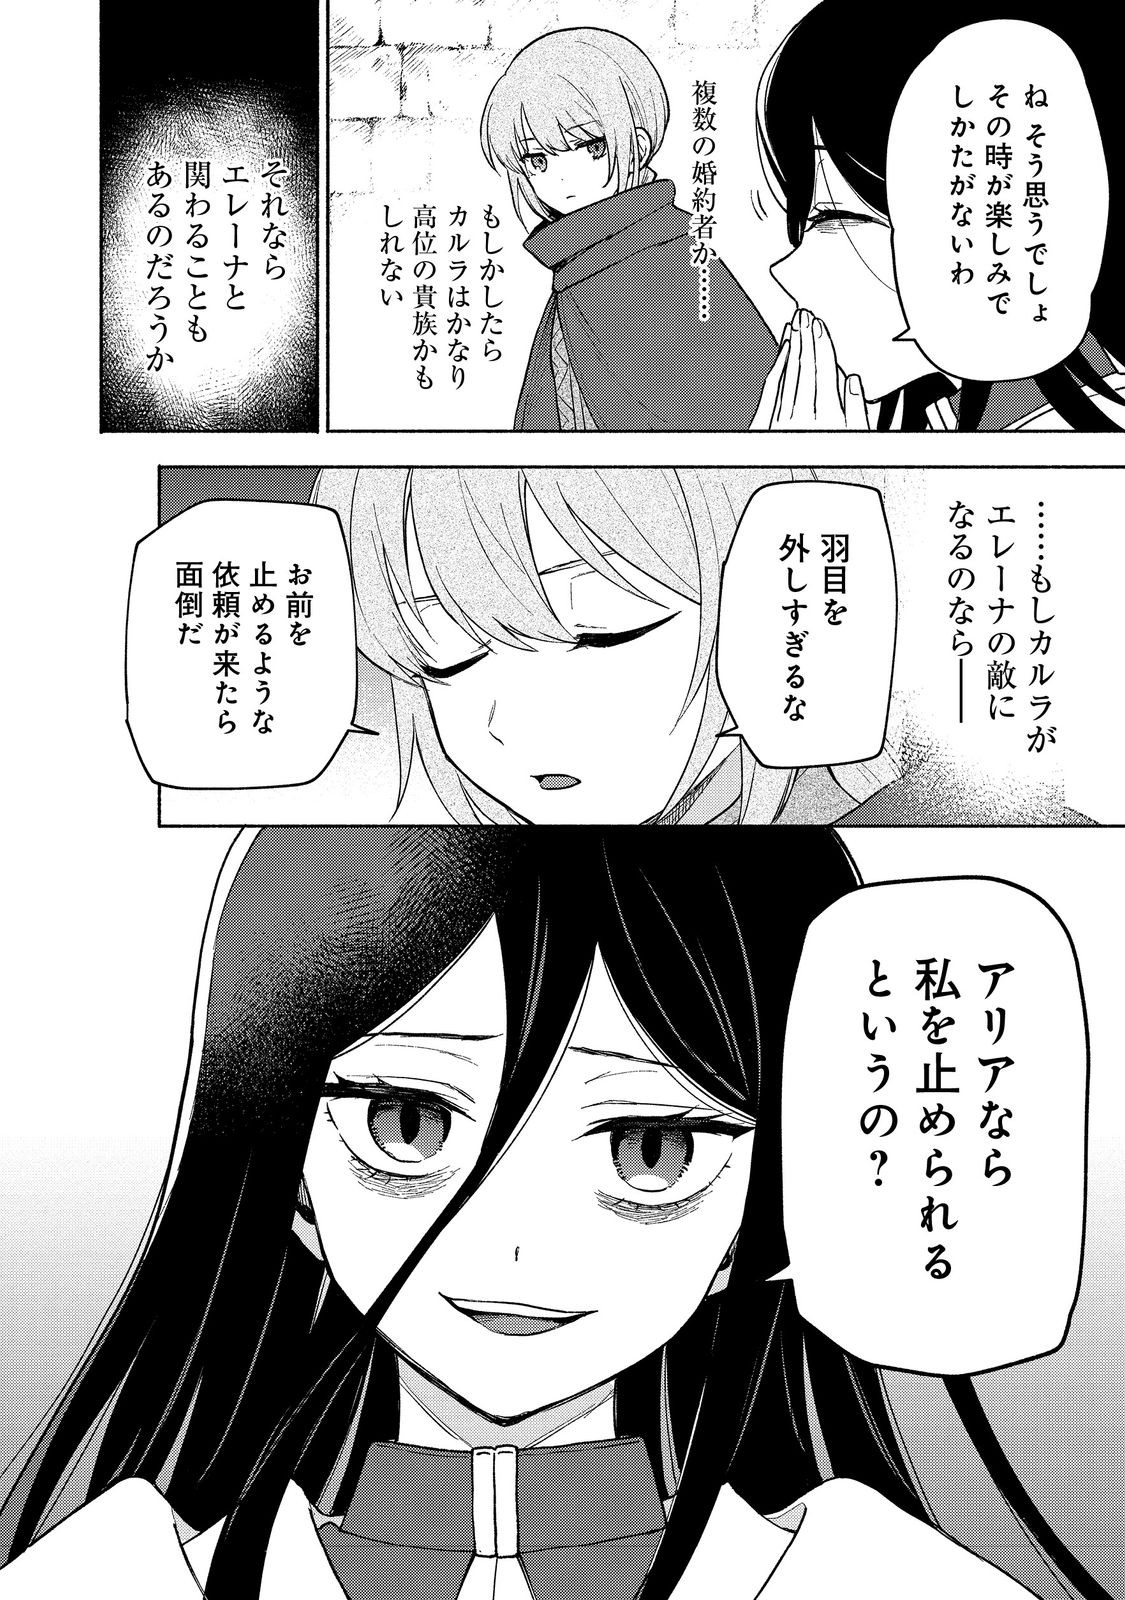 Otome Game no Heroine de Saikyou Survival - Chapter 23 - Page 16